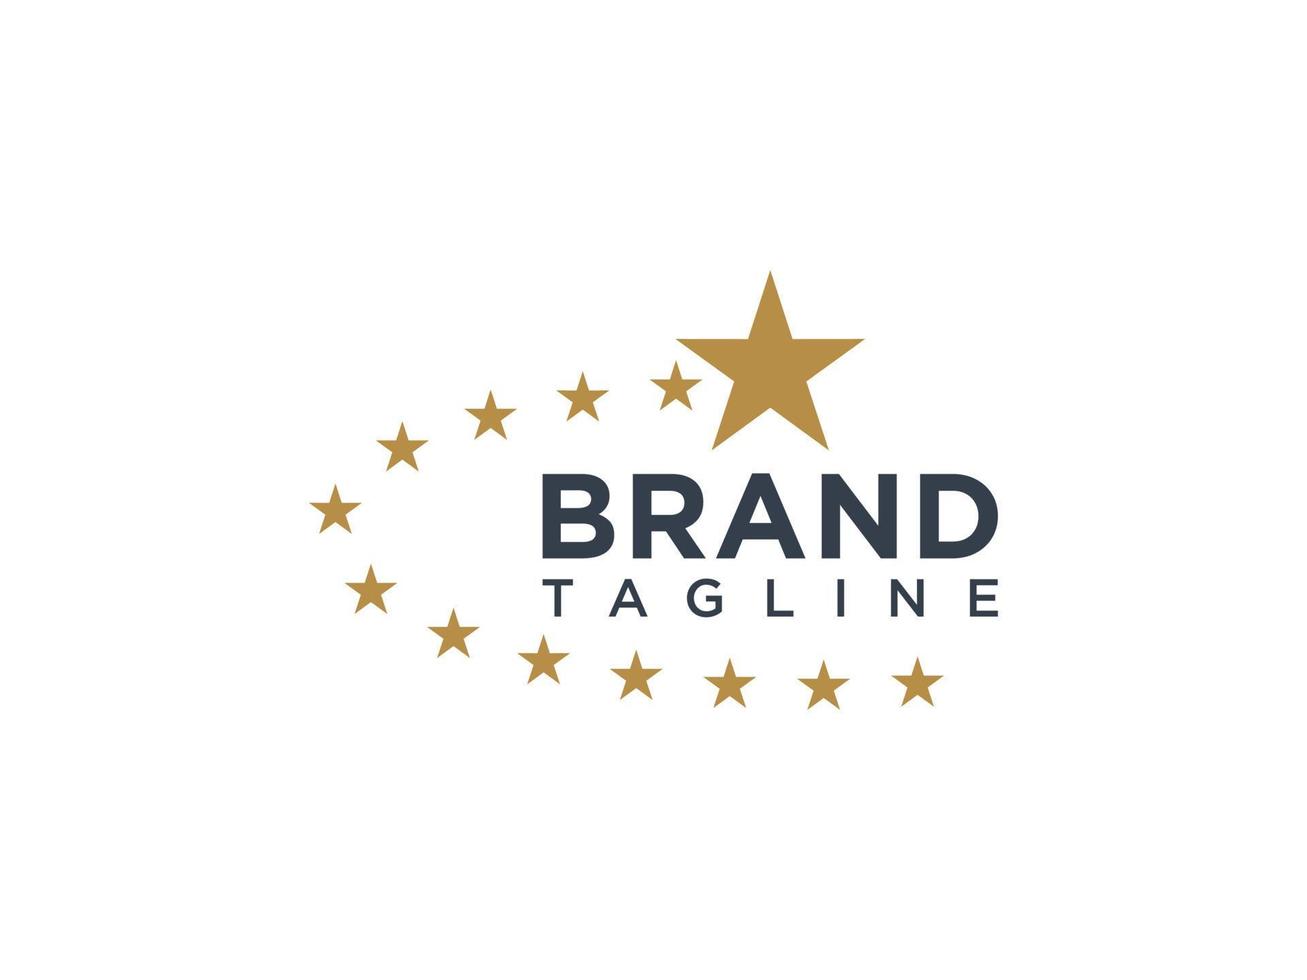 Star Logo Design isolated on white background Vector Logo Template